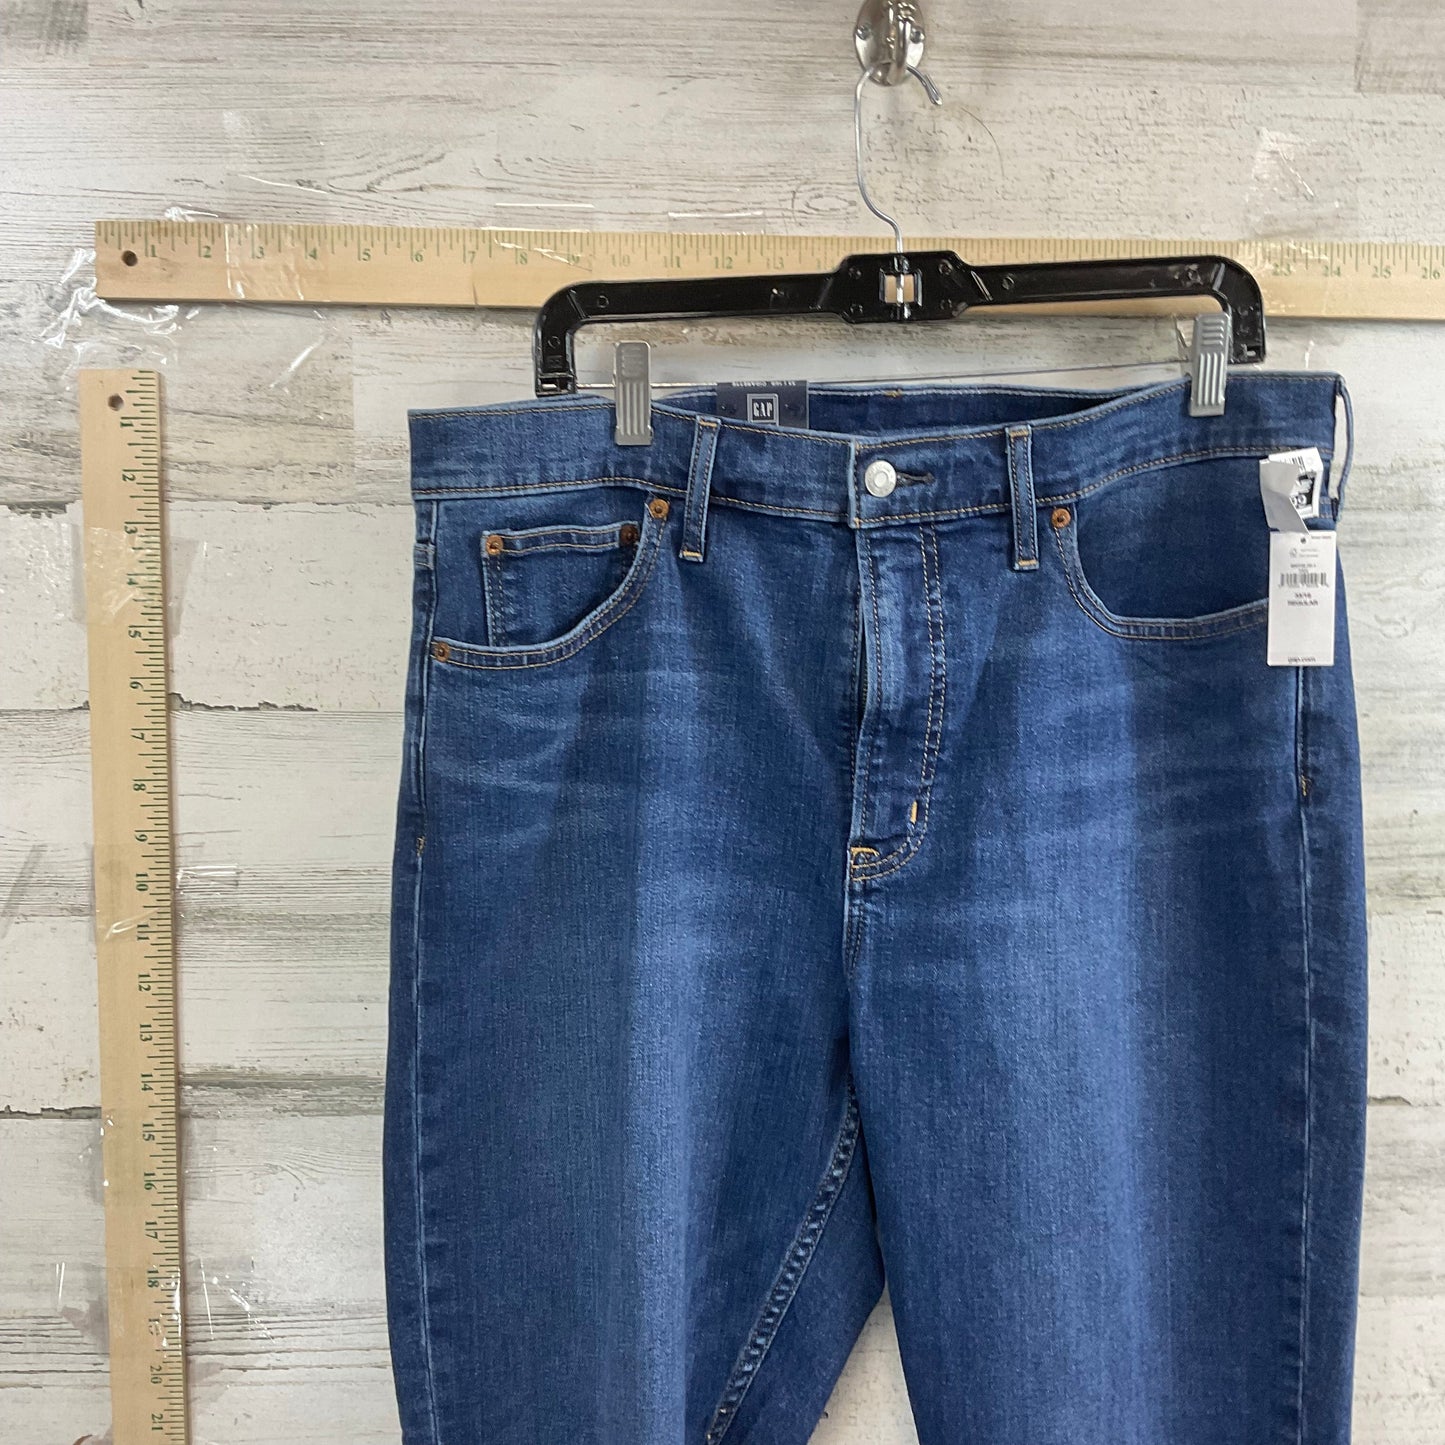 Blue Denim Jeans Straight Gap, Size 16